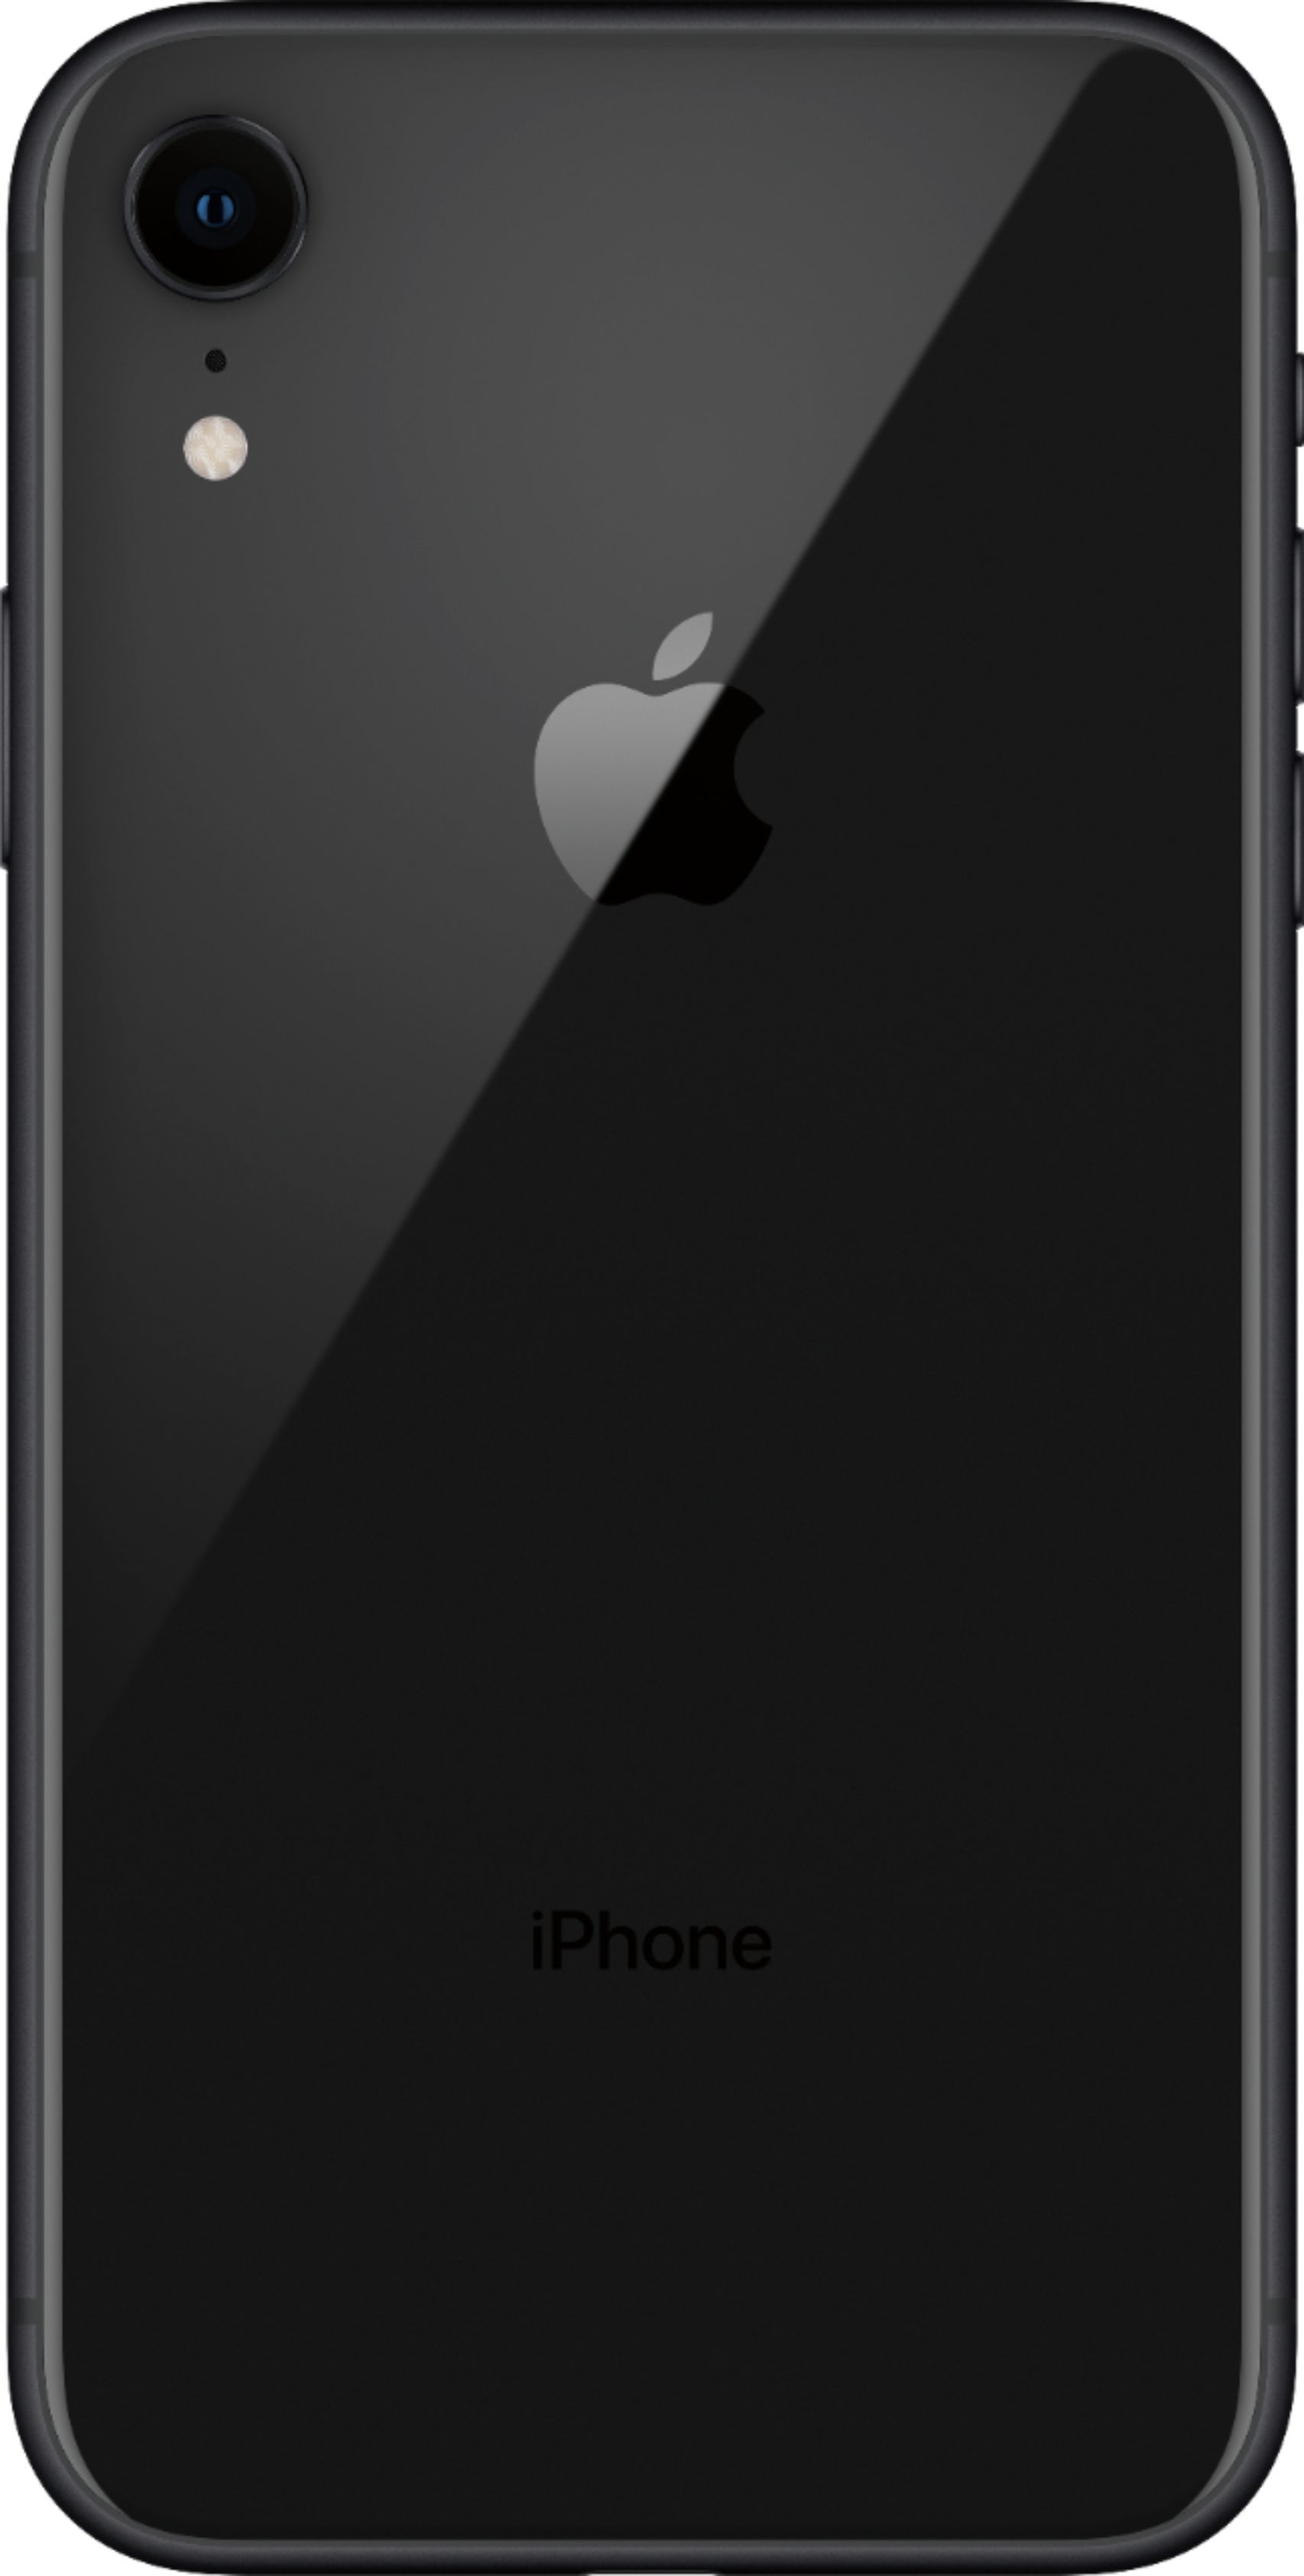 iPhone XR  64GB MT002J/A